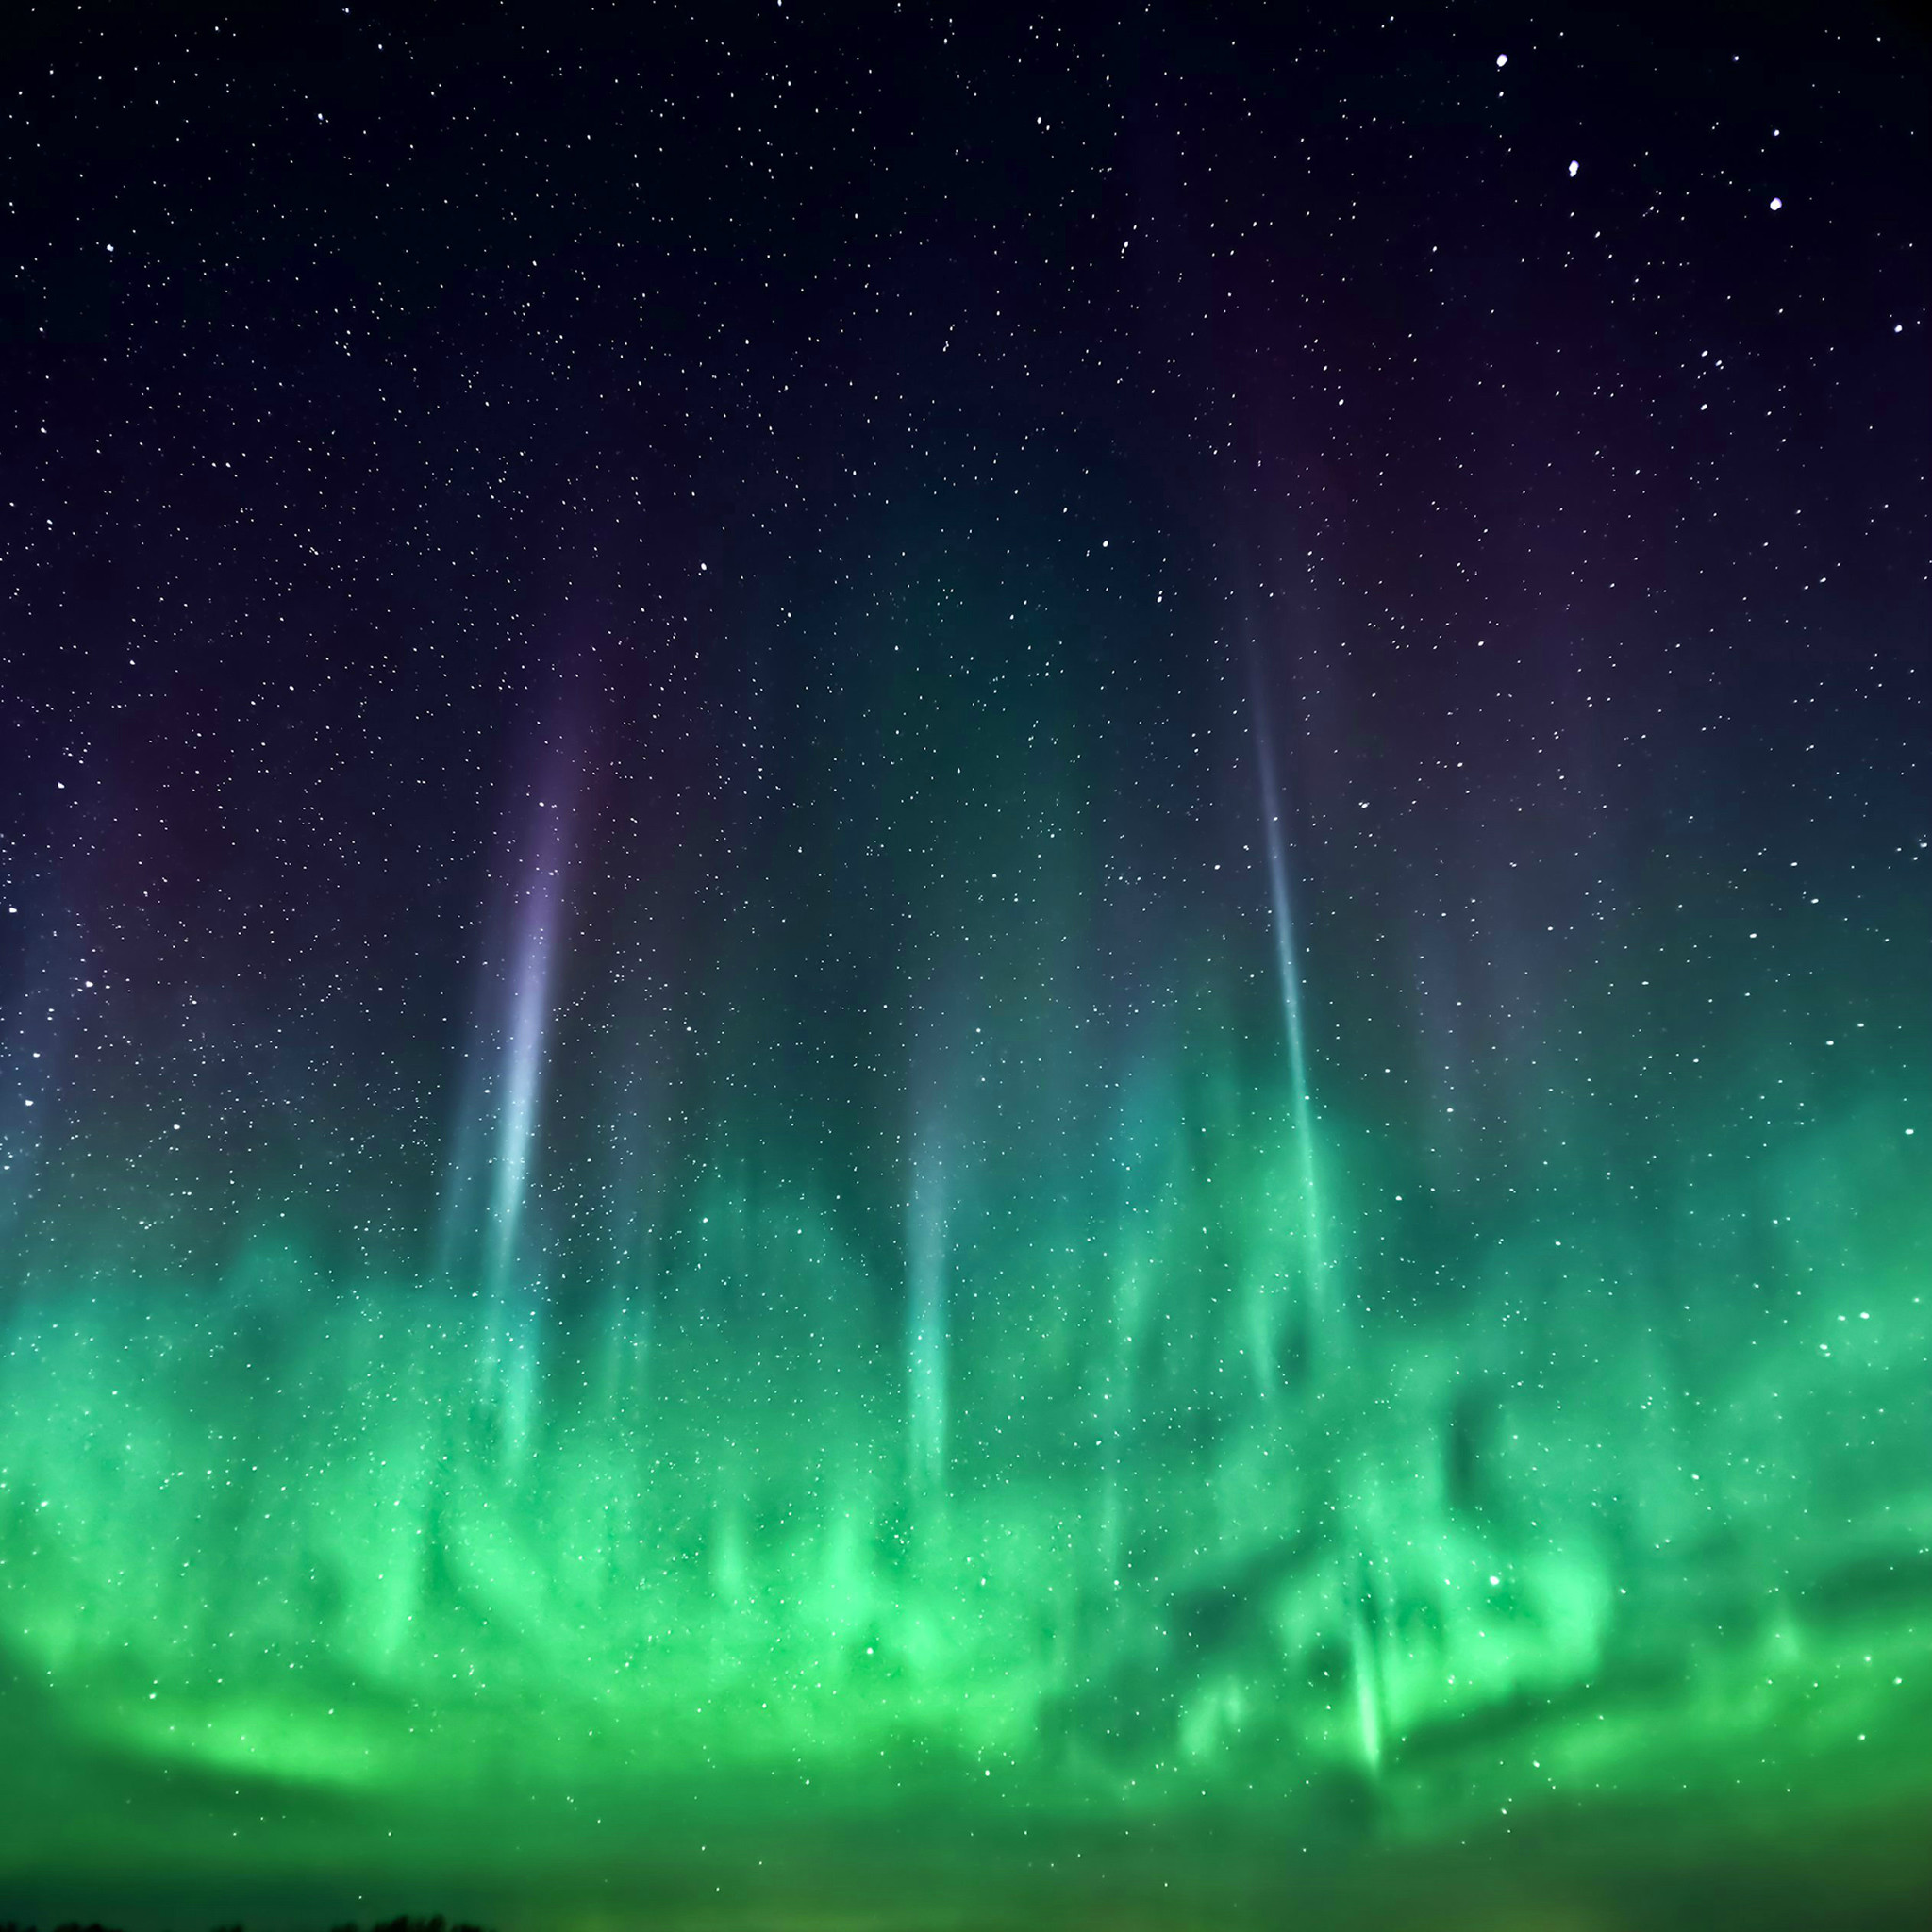 2048x2048 2050 2: Wonderful Northern Aurora Lights Skyscape Space View iPad wallpaper